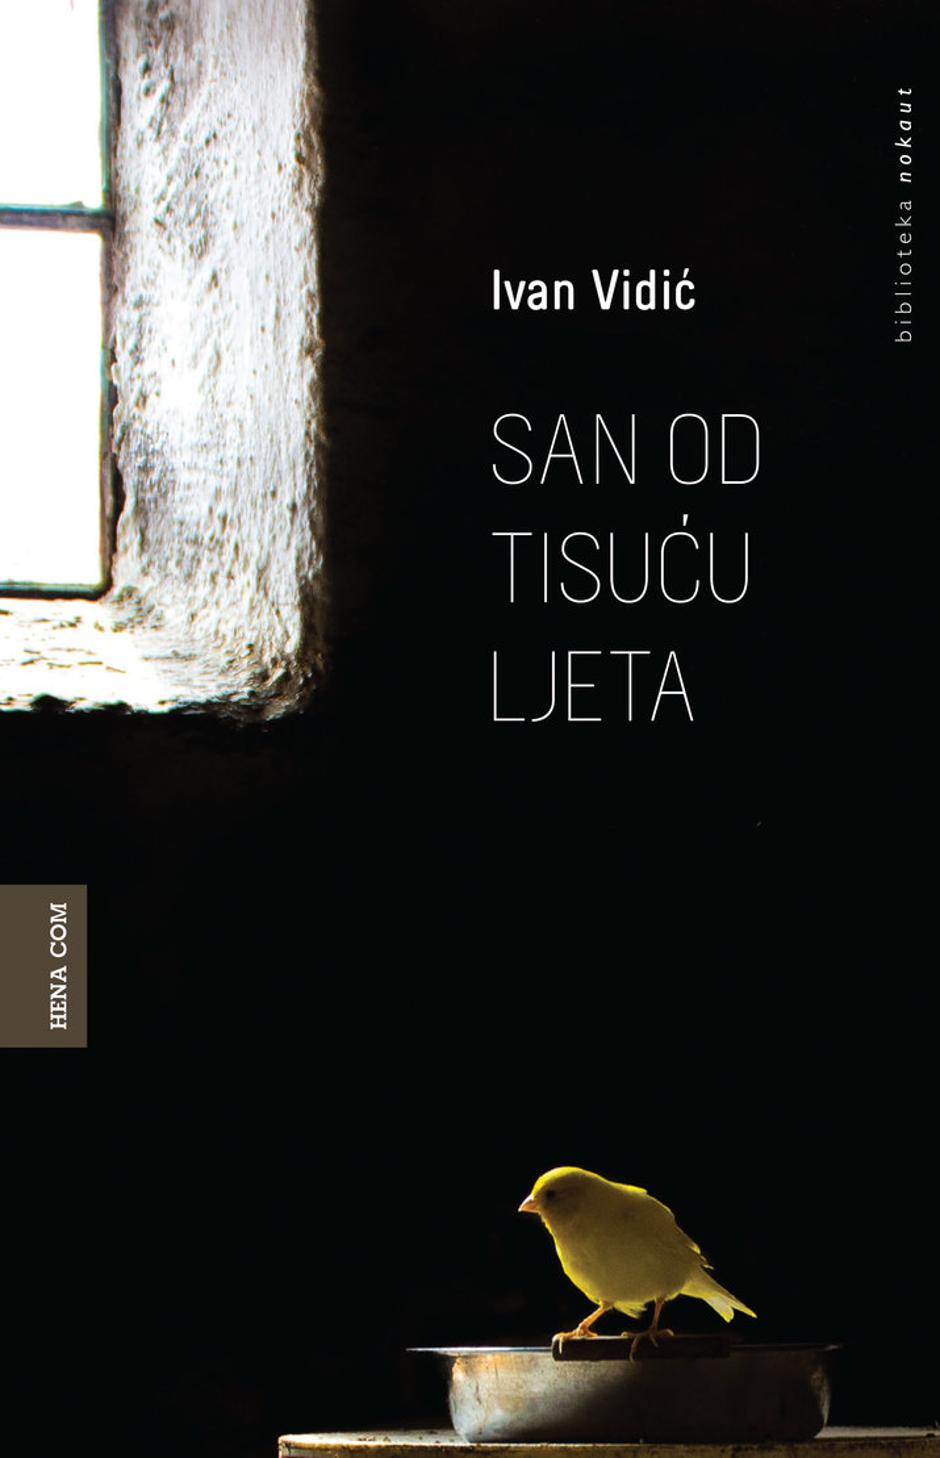 Ivan Vidić | Author: Hena